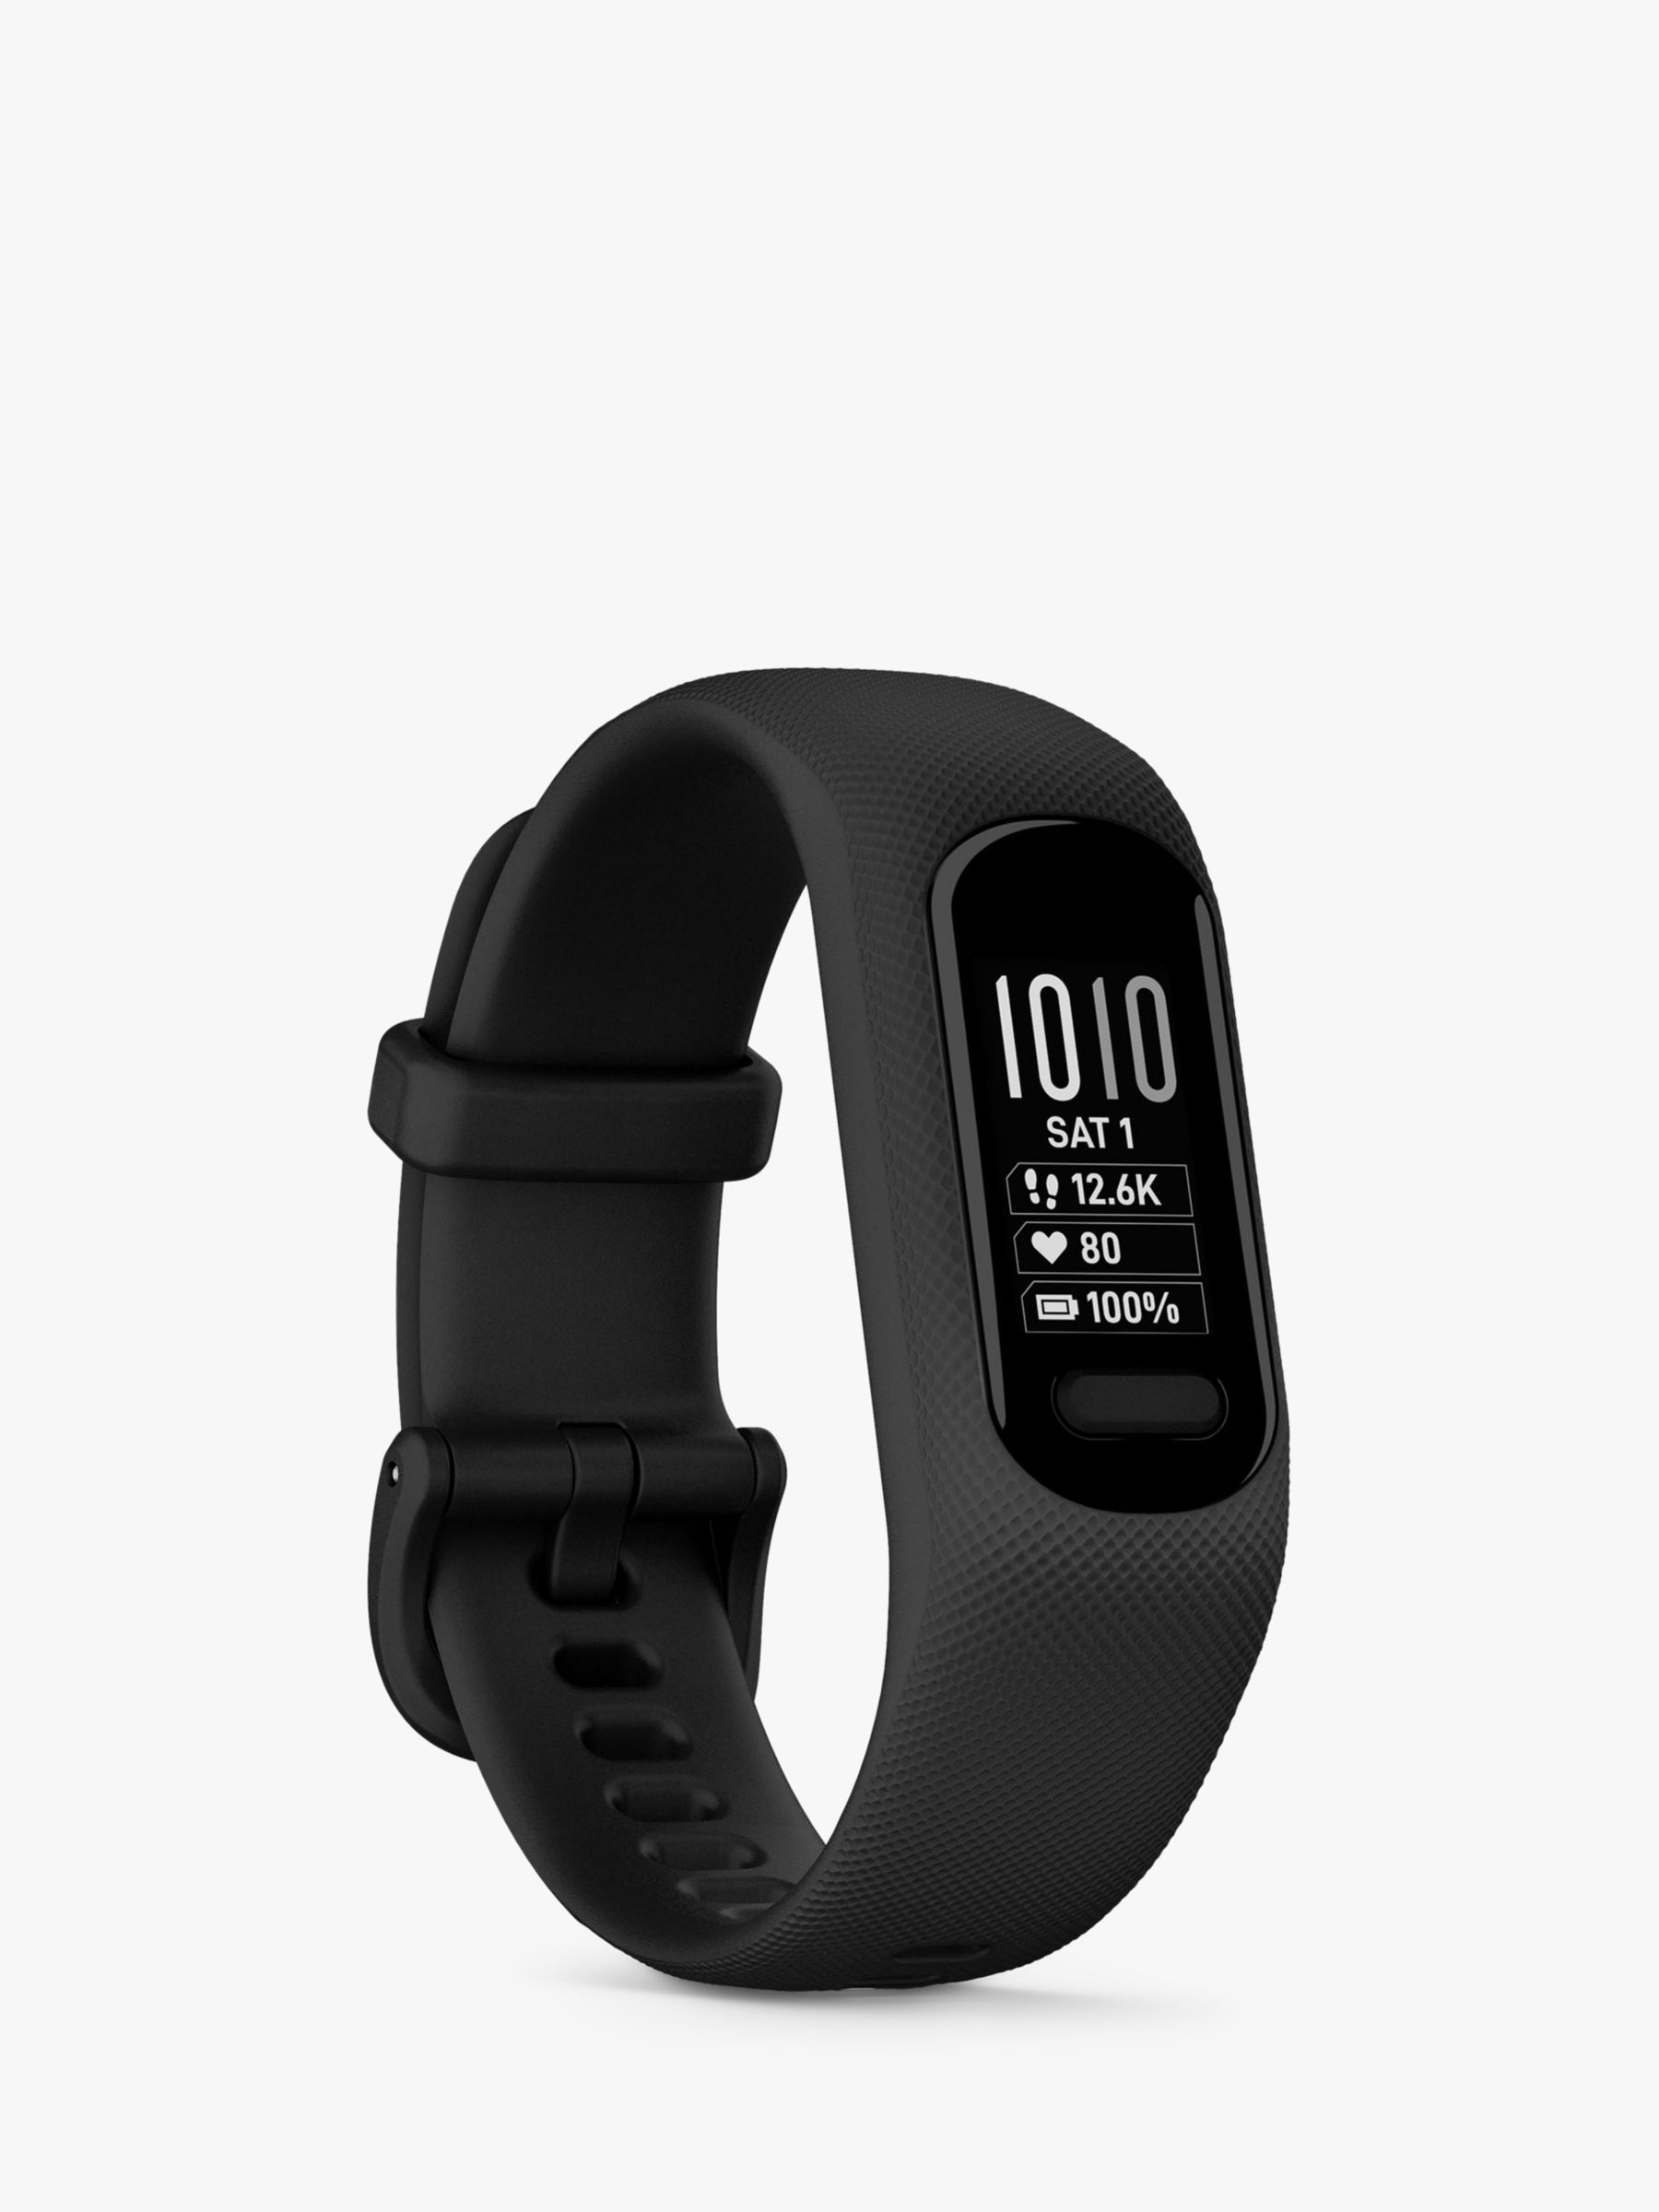 Garmin vivosmart 5 Fitness Activity Tracker with Wrist Based Heart Rate ...